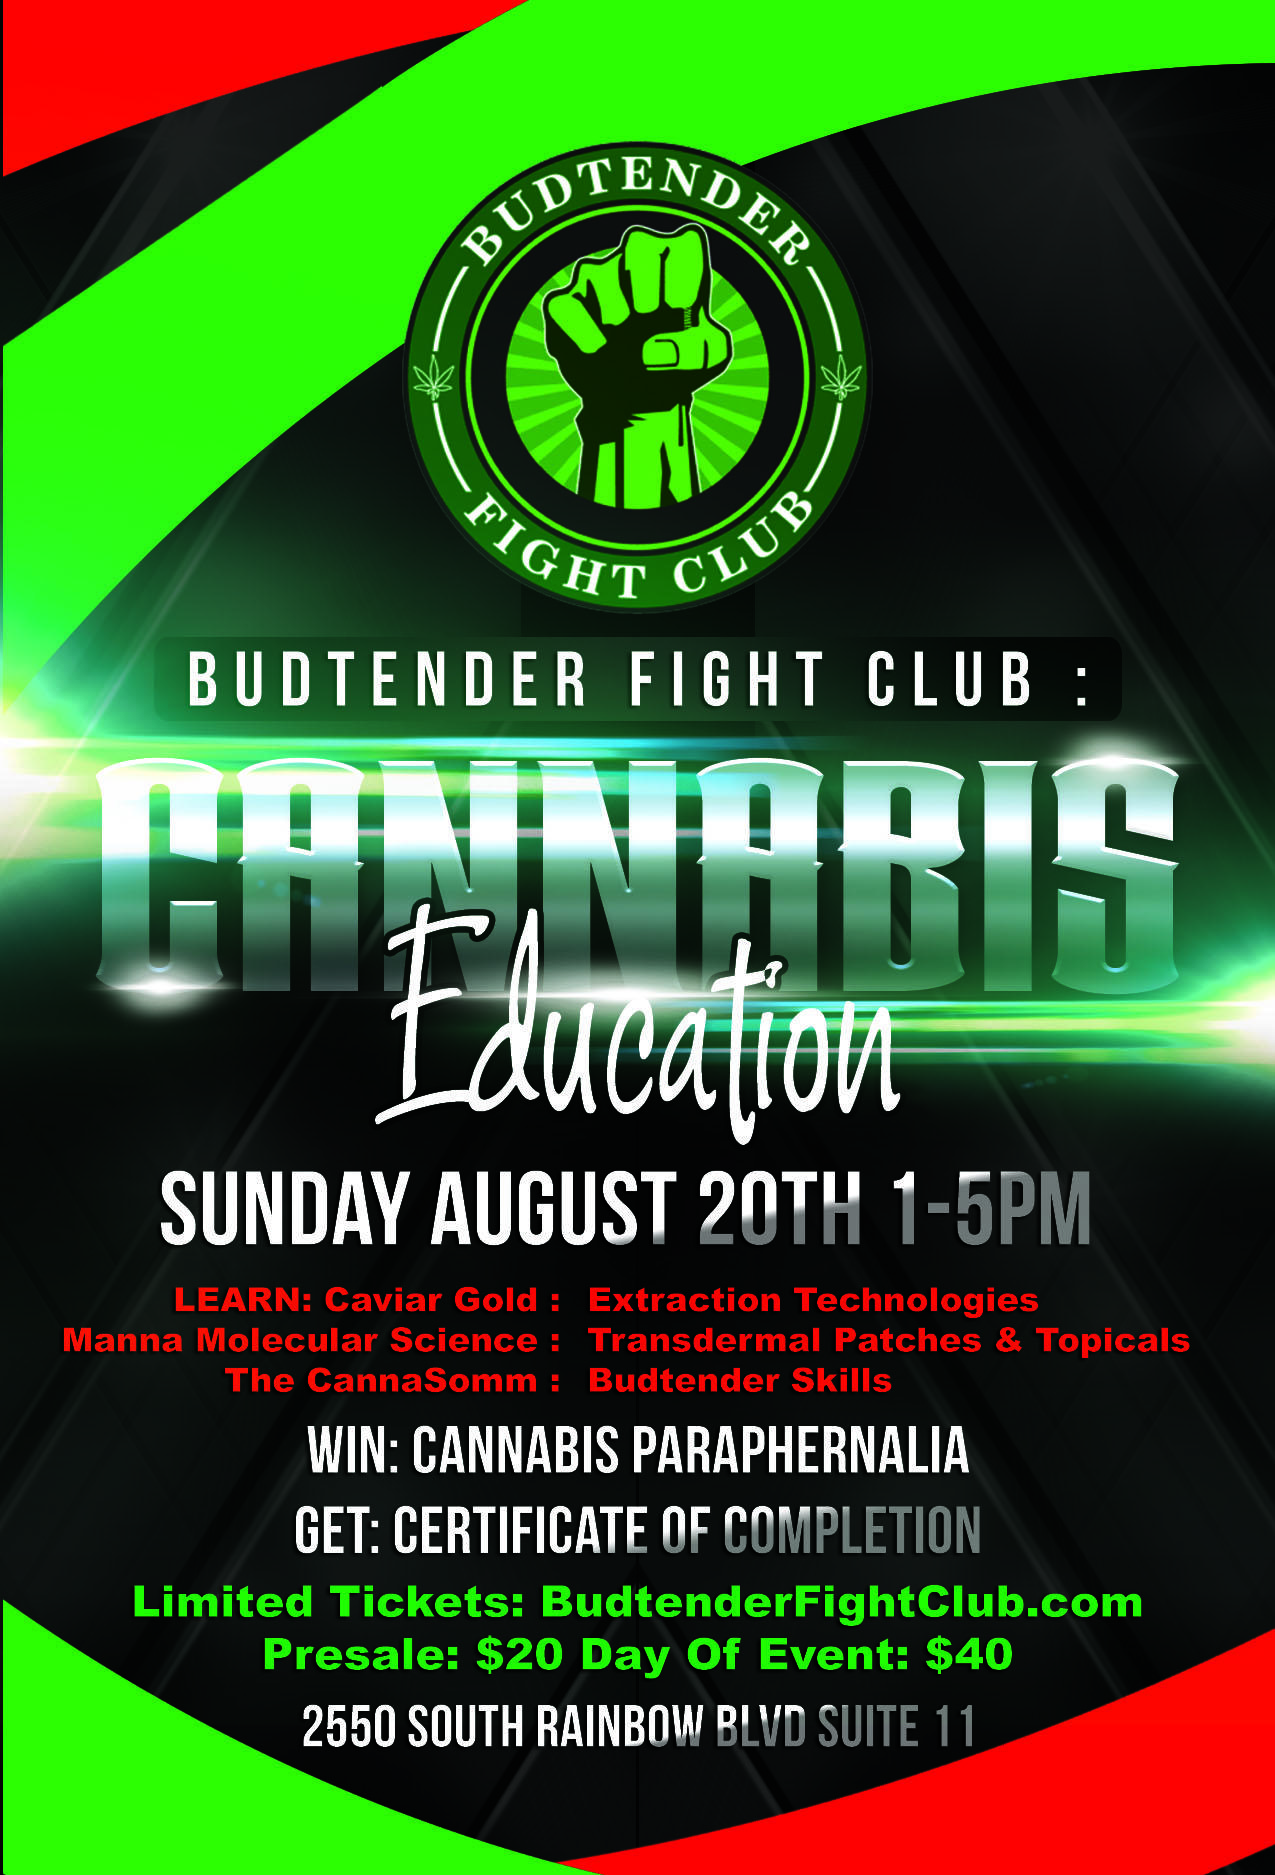 Budtender Fight Club Las Vegas January 26th : Cannabis Education - Marijuana Jobs - 1-5PM